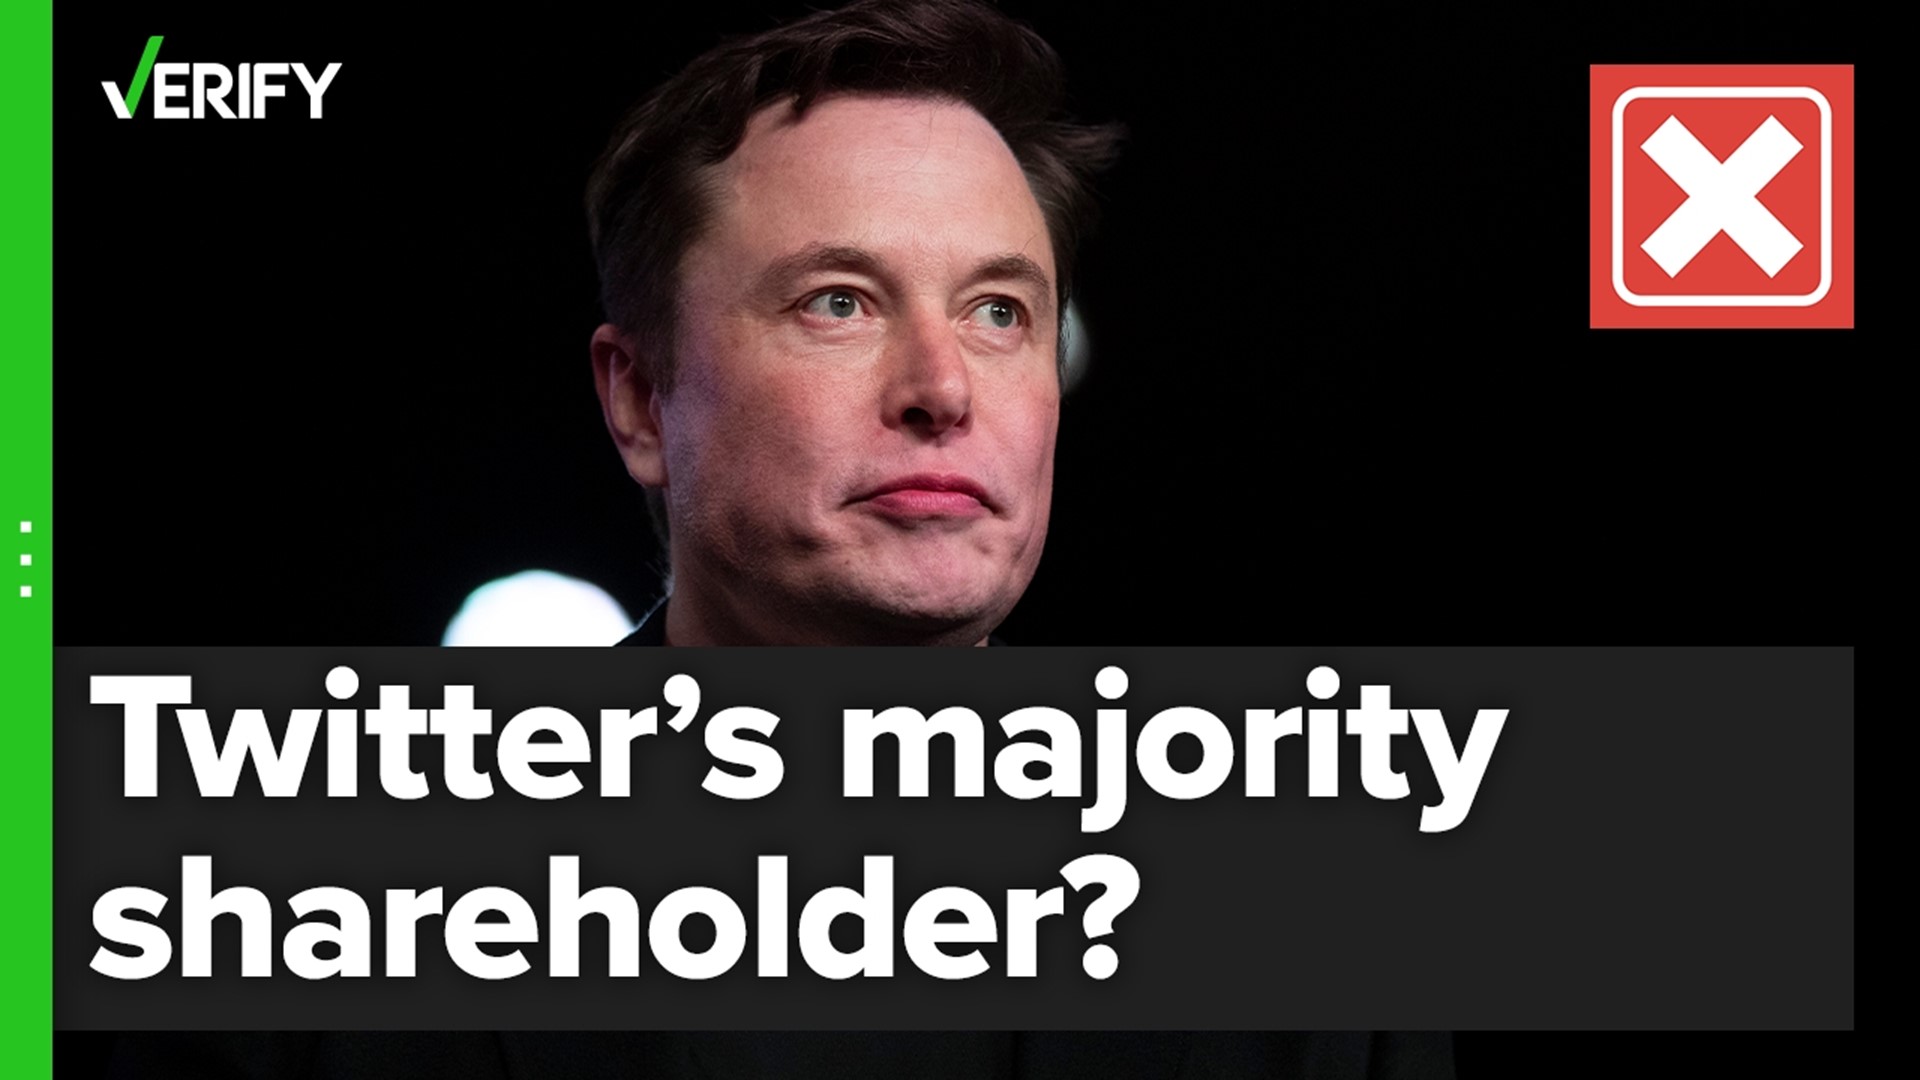 Is Elon Musk Twitter's majority shareholder? The VERIFY team confirms this is false.